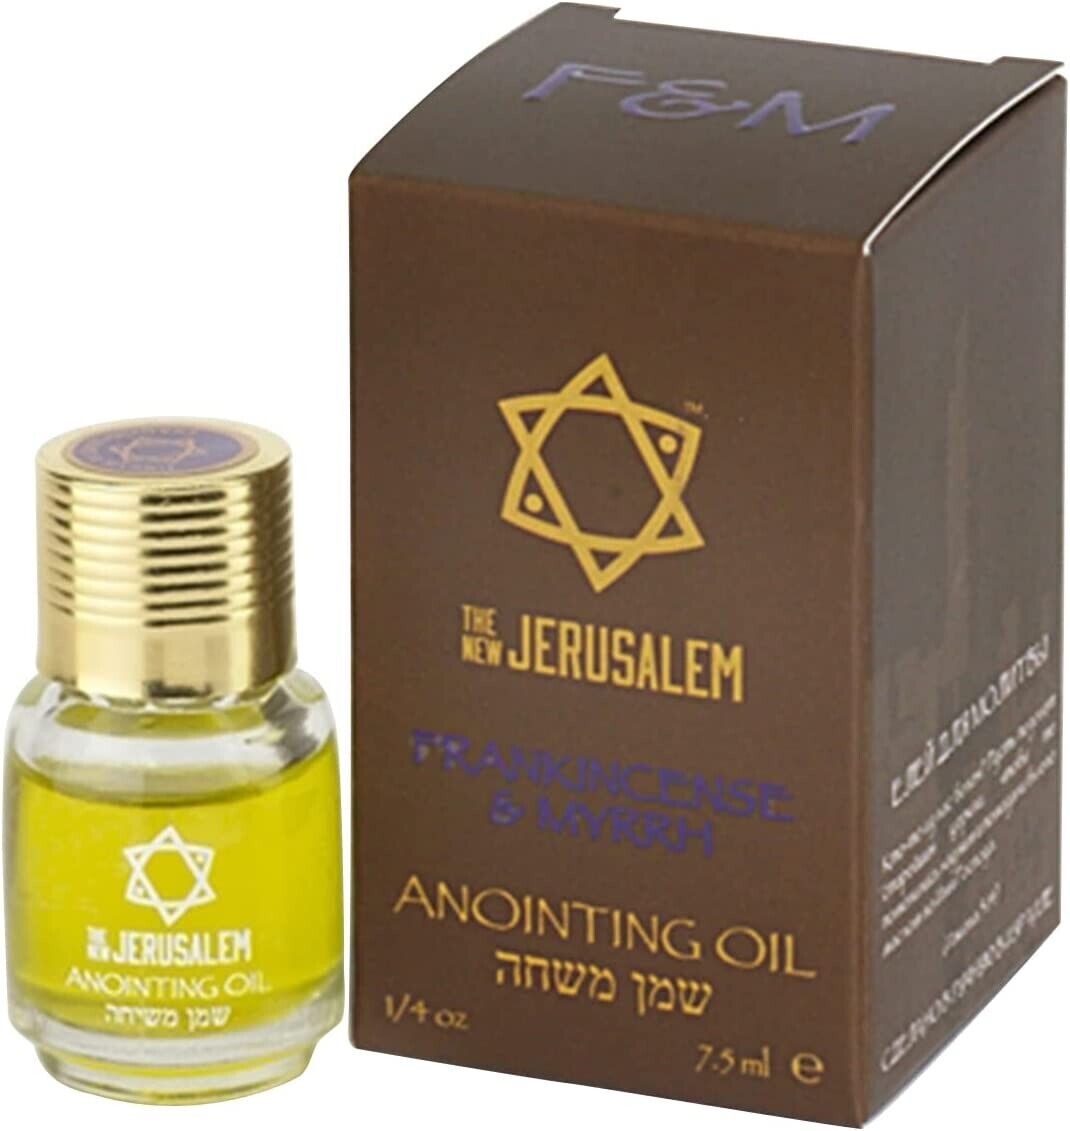 Frankincense and Myrrh Anointing Holy Oil 7.5 ml / 0.25 Fl Oz from Jerusalem